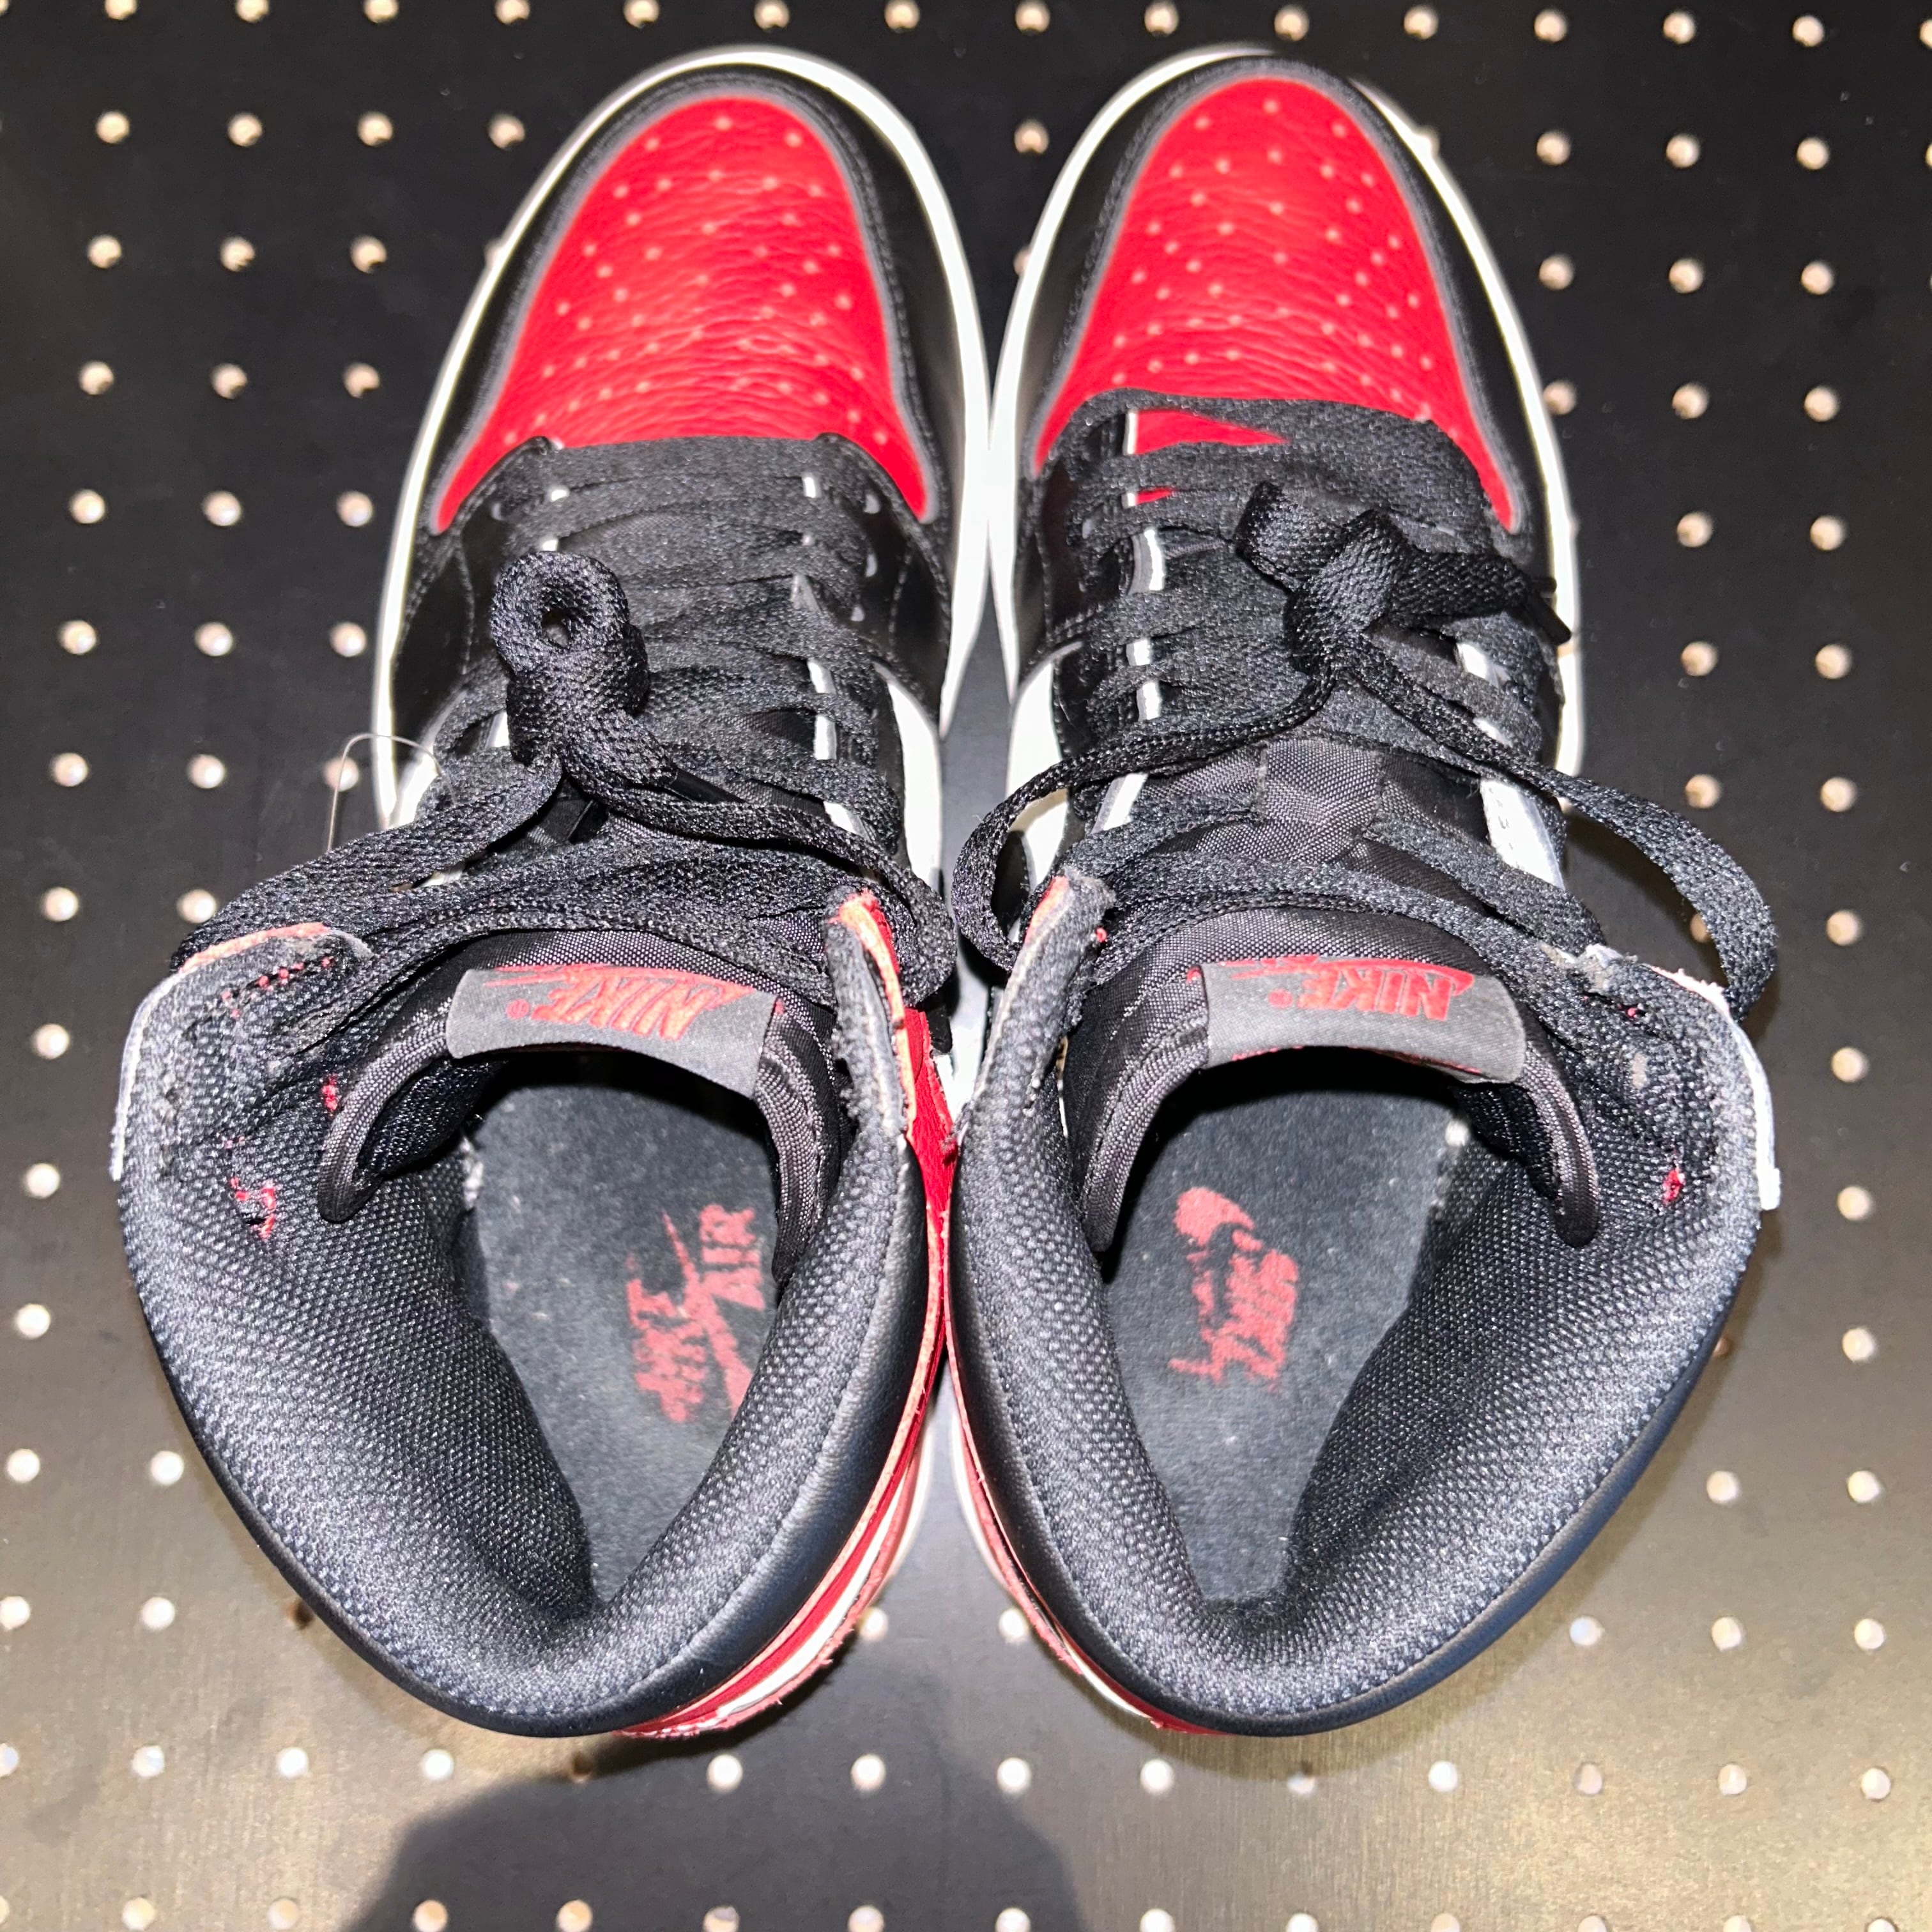 Nike Air Jordan 1 Retro High OG 